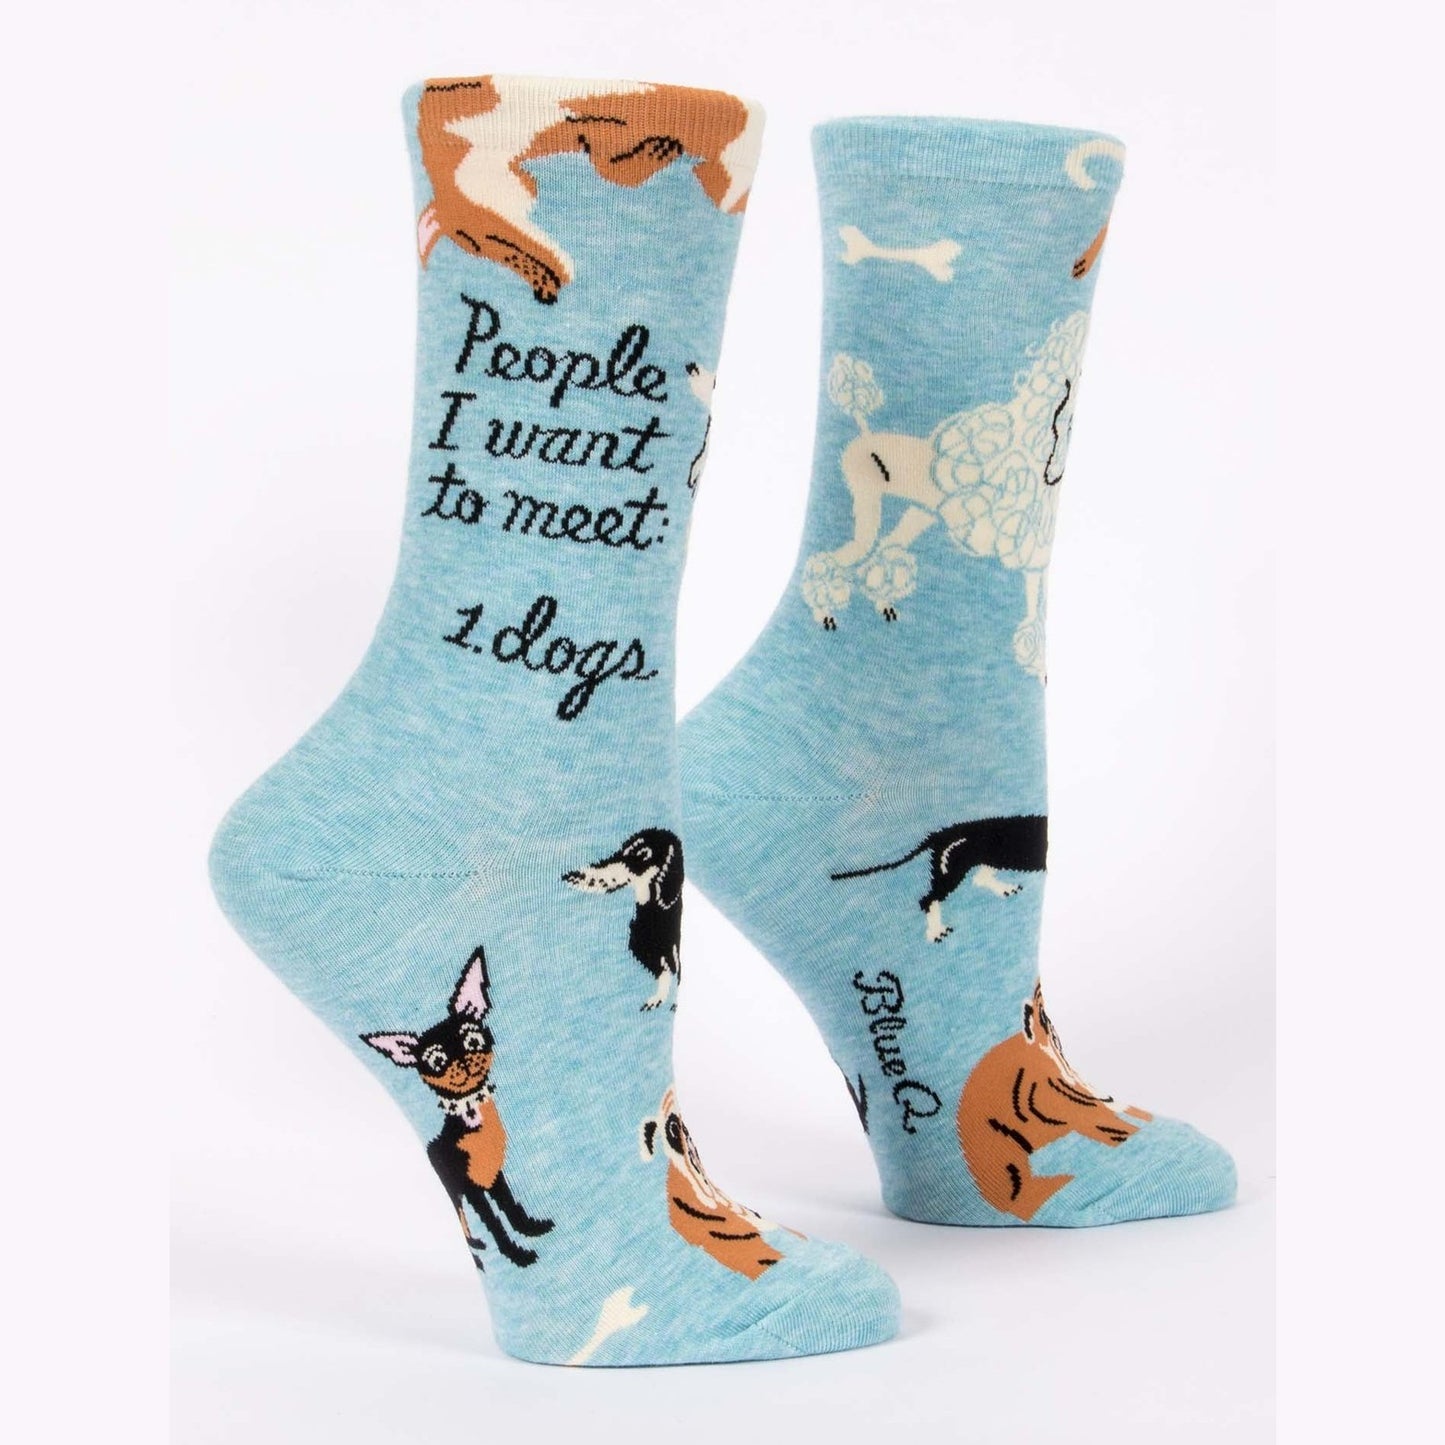 People To Meet: Dogs Crew Socks